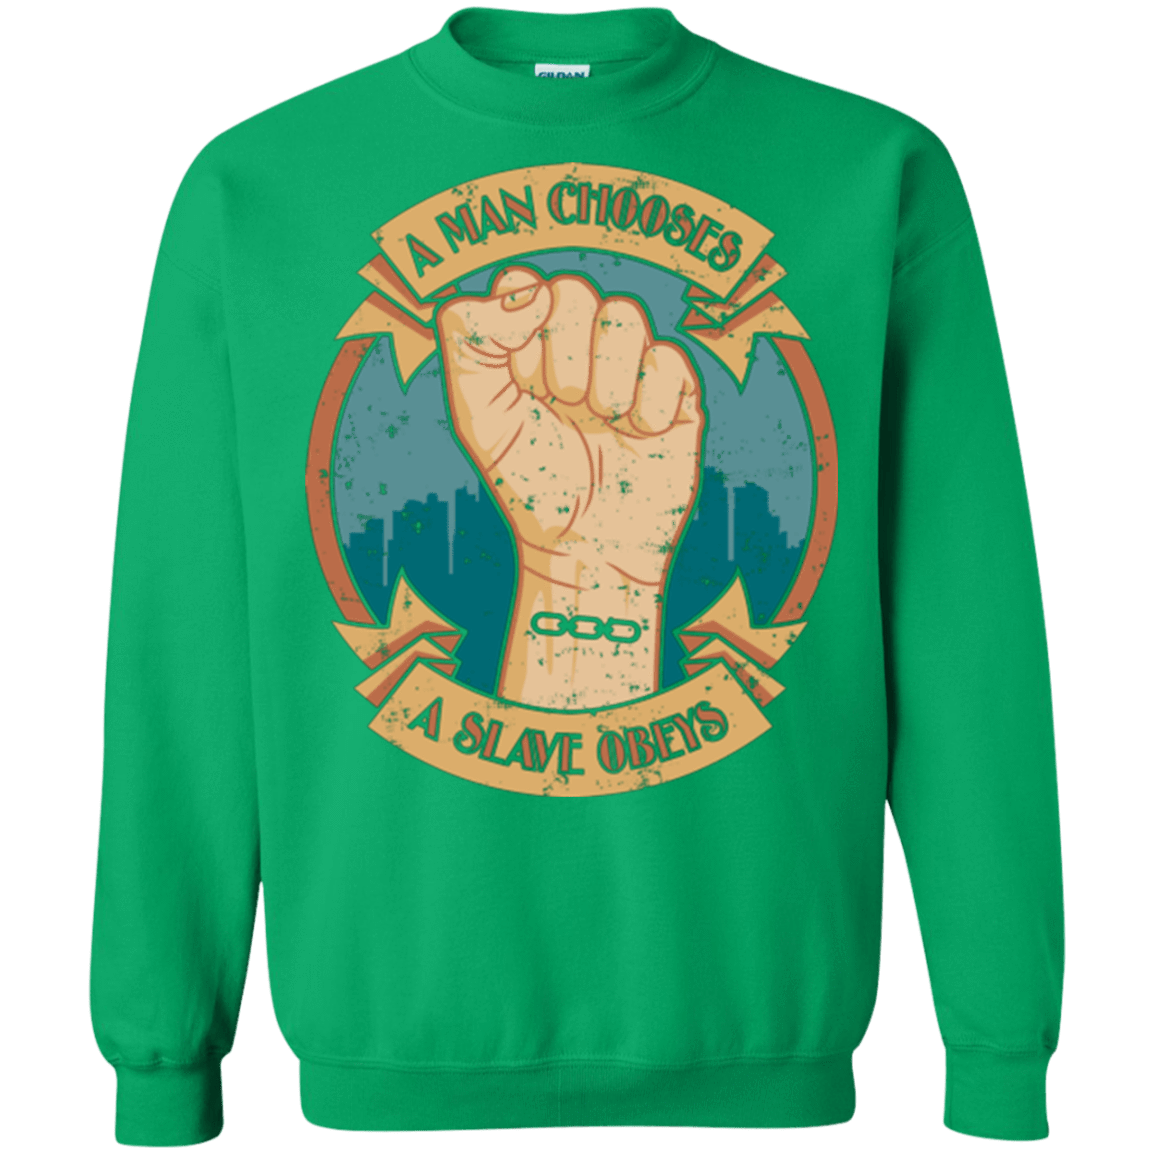 Sweatshirts Irish Green / Small A Man Chooses A Slave Obeys Crewneck Sweatshirt